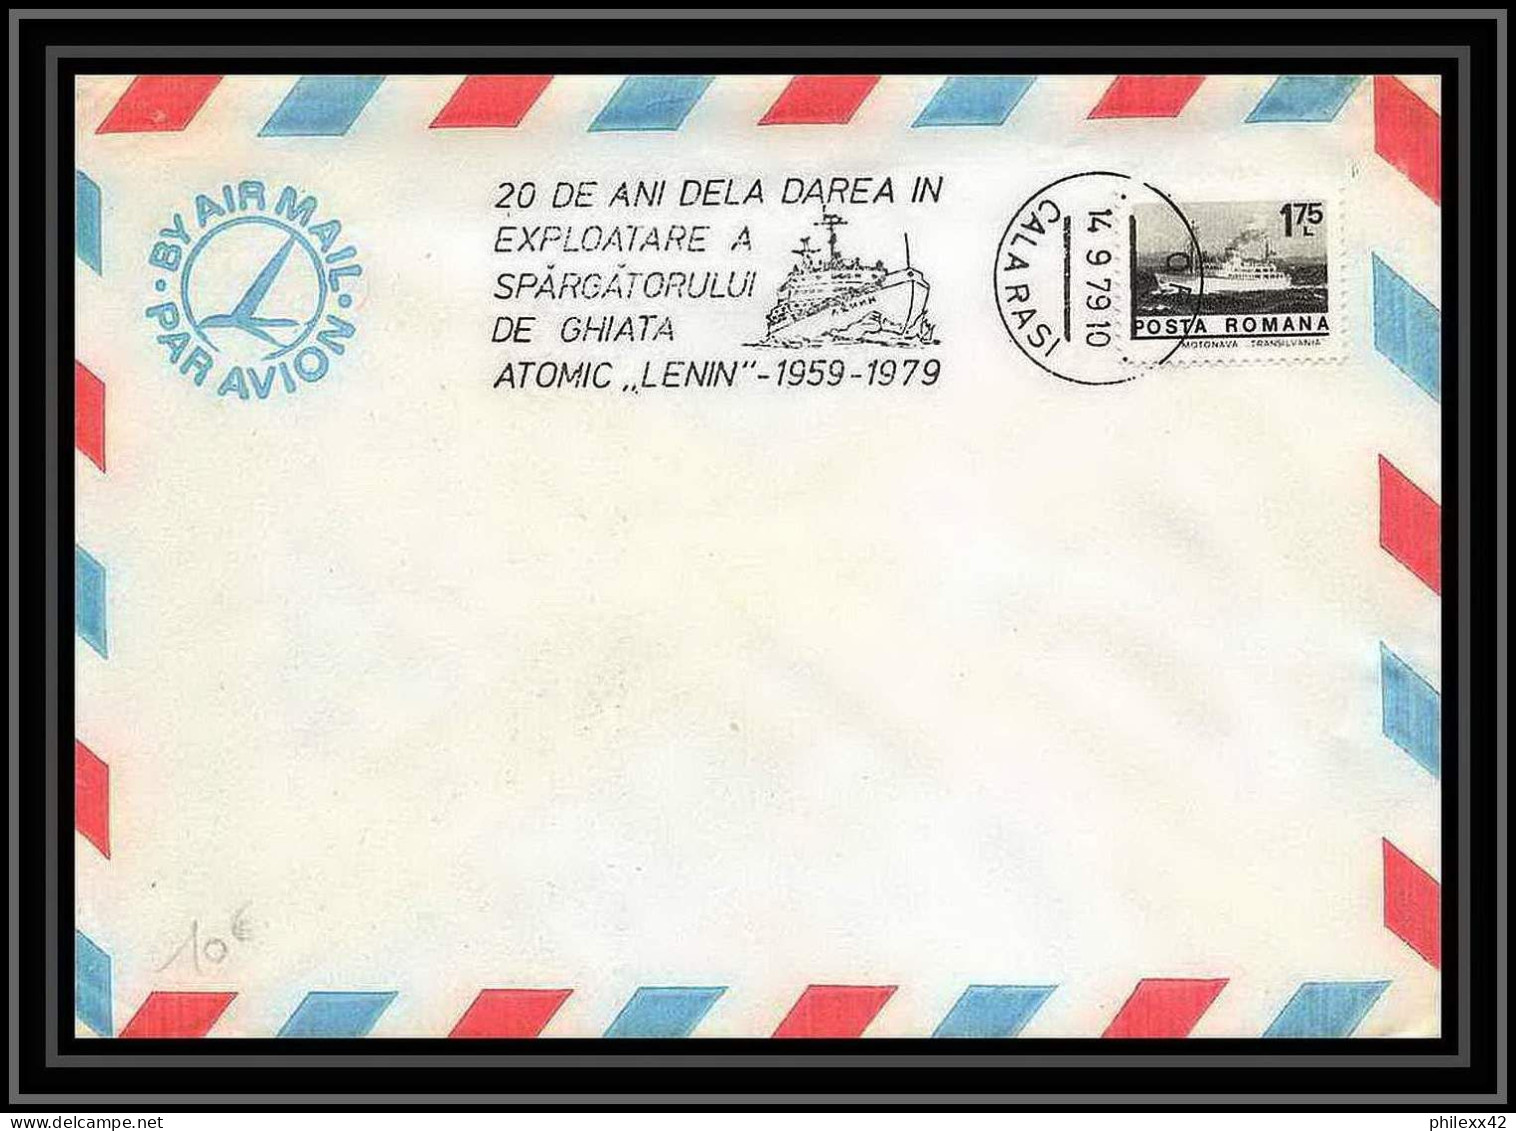 2017 Roumanie (Romania) Lettre (cover) Spargatorului Ghiata Atomic Lenin 14/9/1979  - Estaciones Científicas